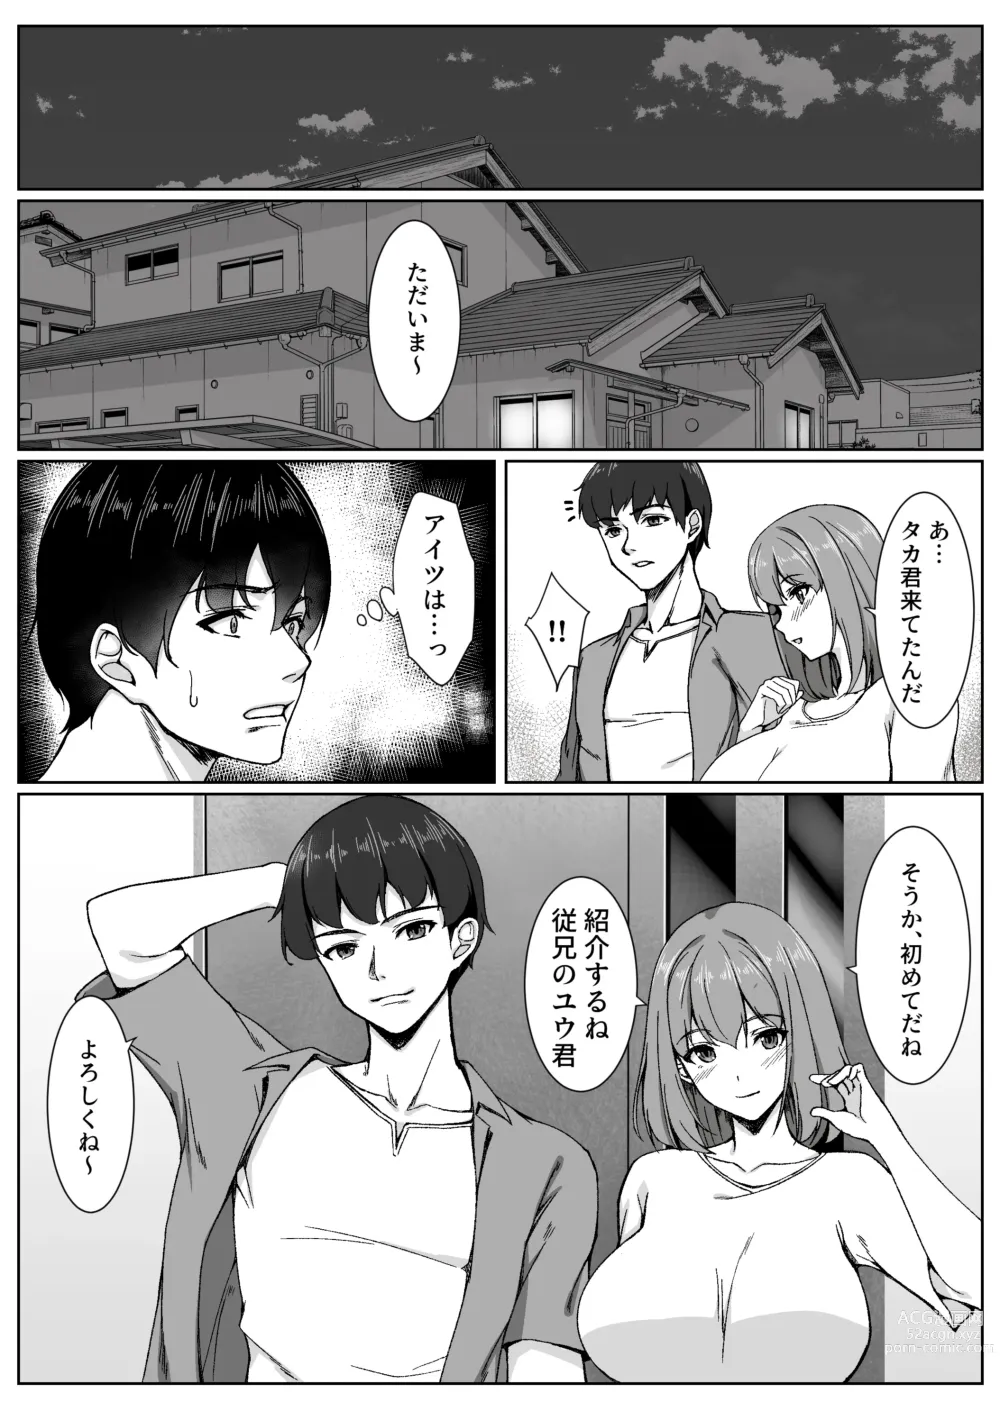 Page 46 of doujinshi Onee-chan yori Iissuyo?